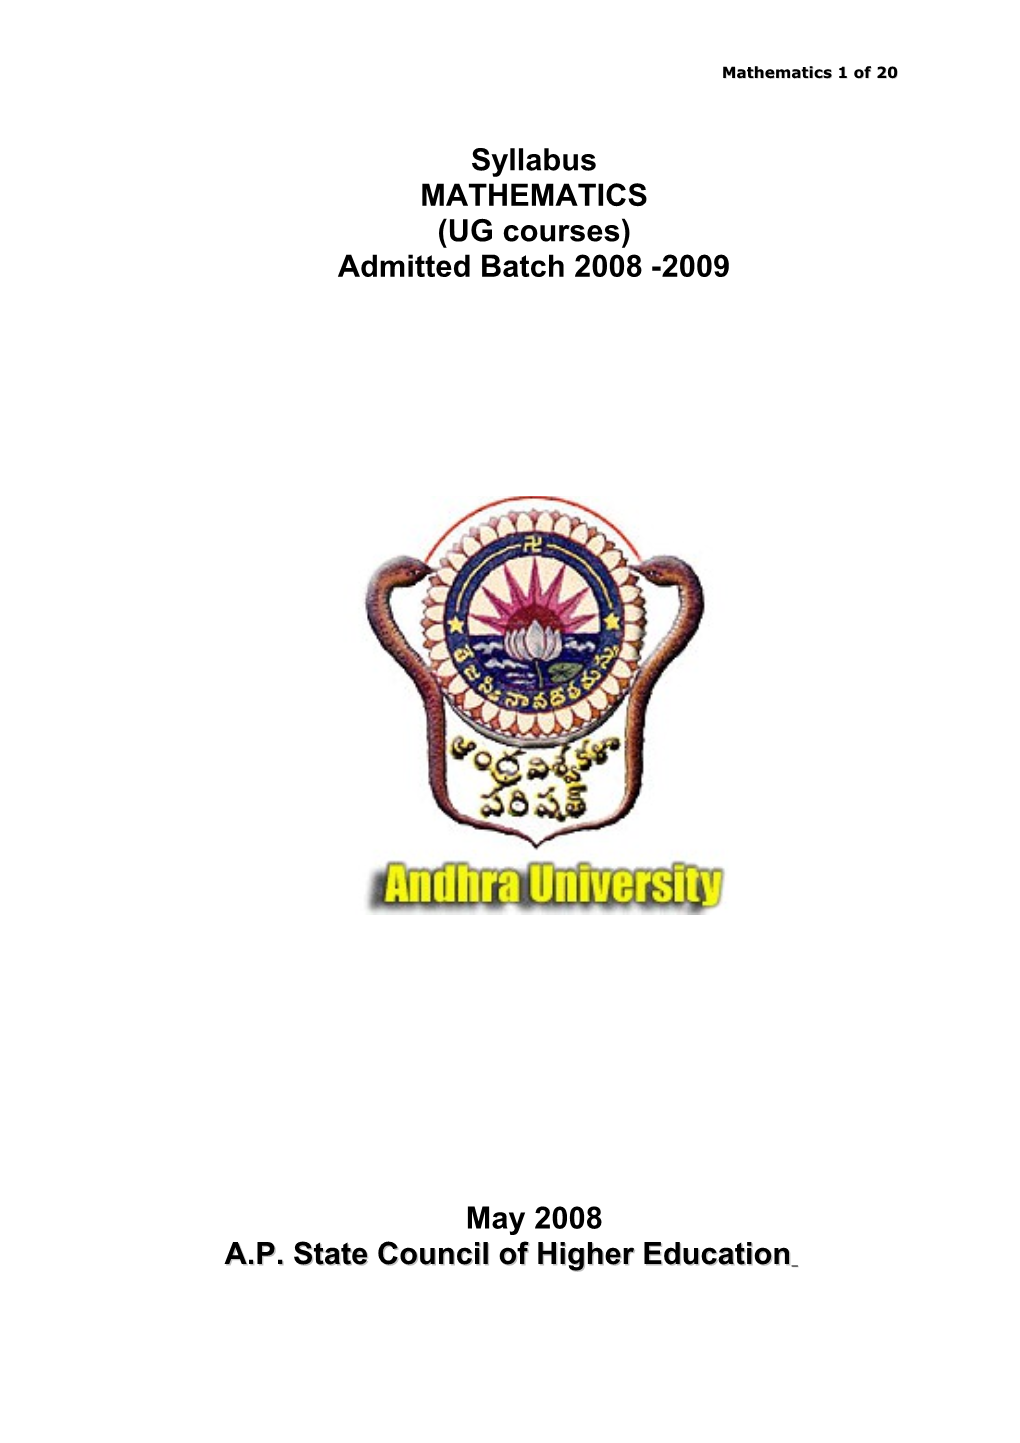 Admitted Batch 2008 -2009